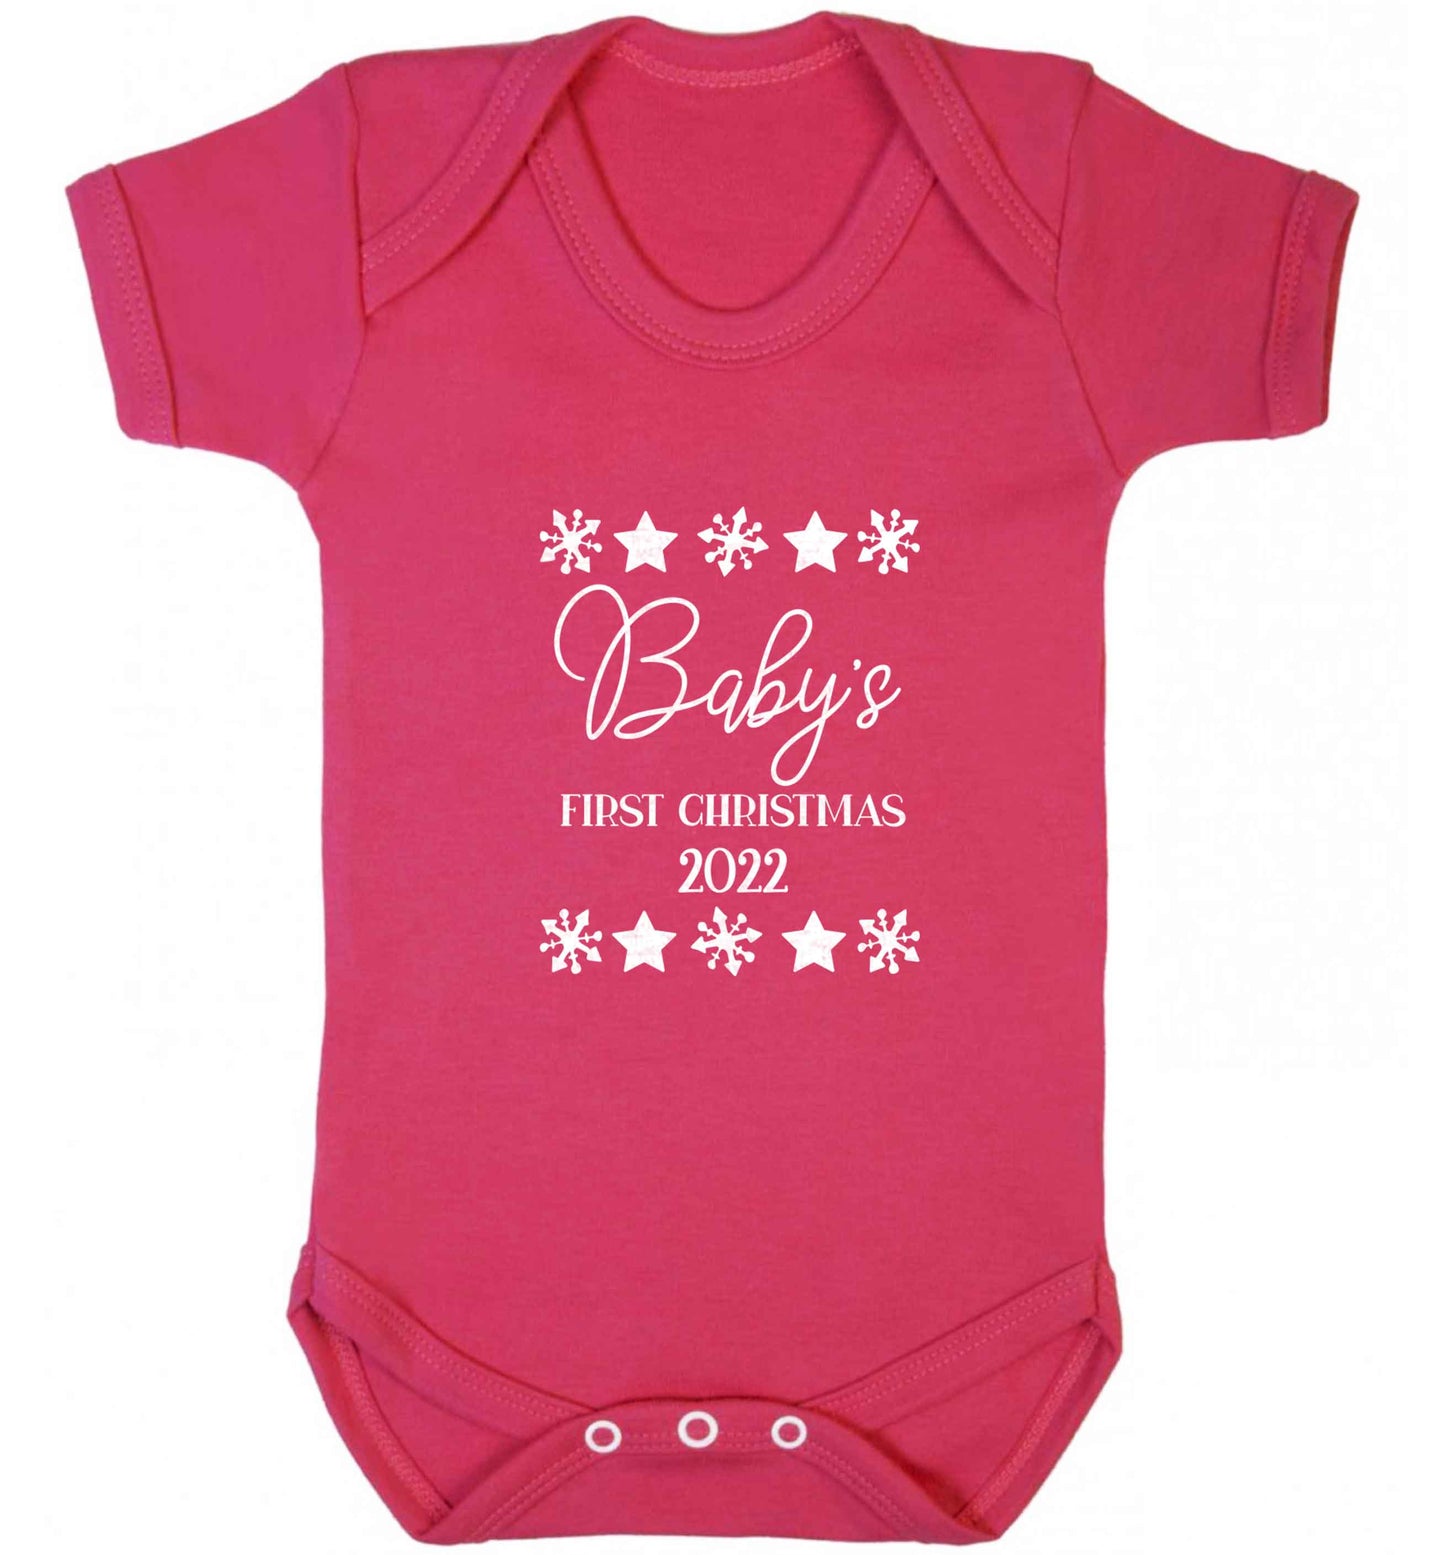 Baby's first Christmas baby vest dark pink 18-24 months